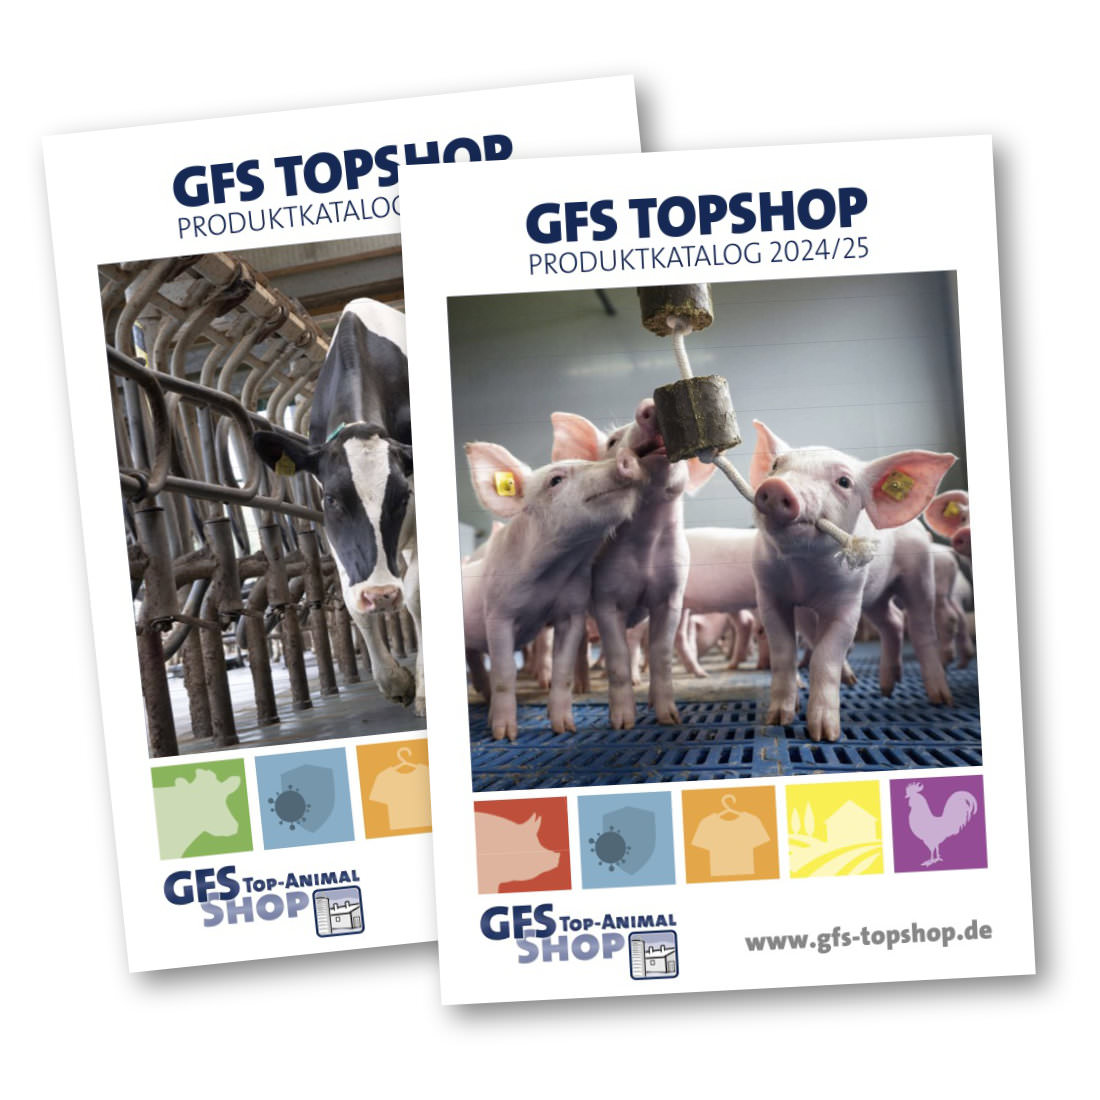 Die GFS TopShop Produktkataloge